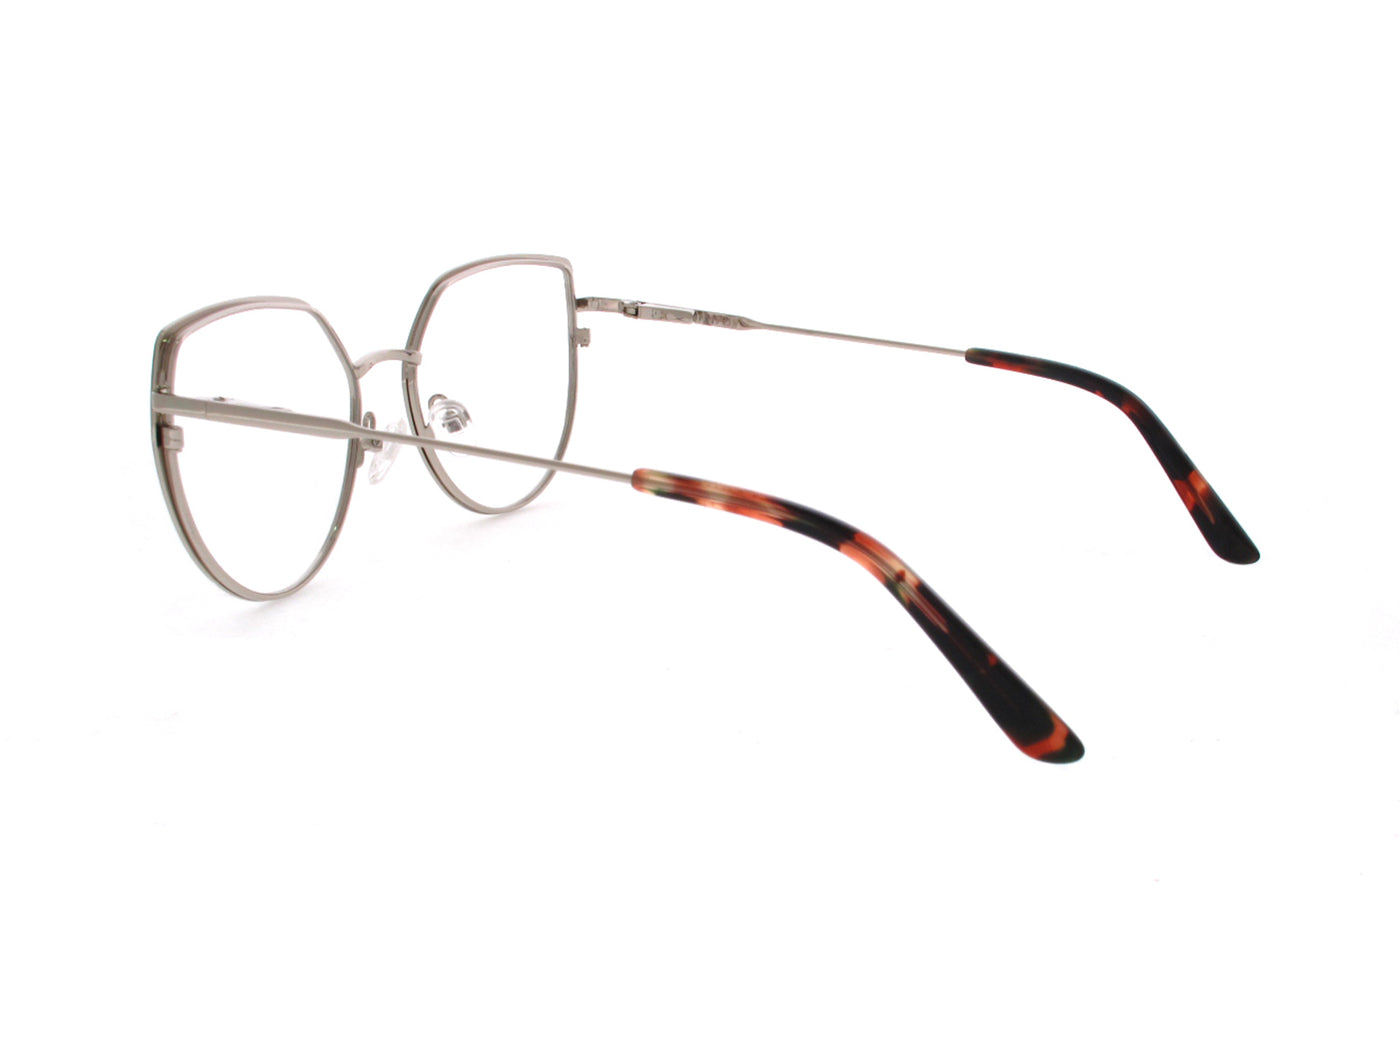 Cateye Glasses 607276